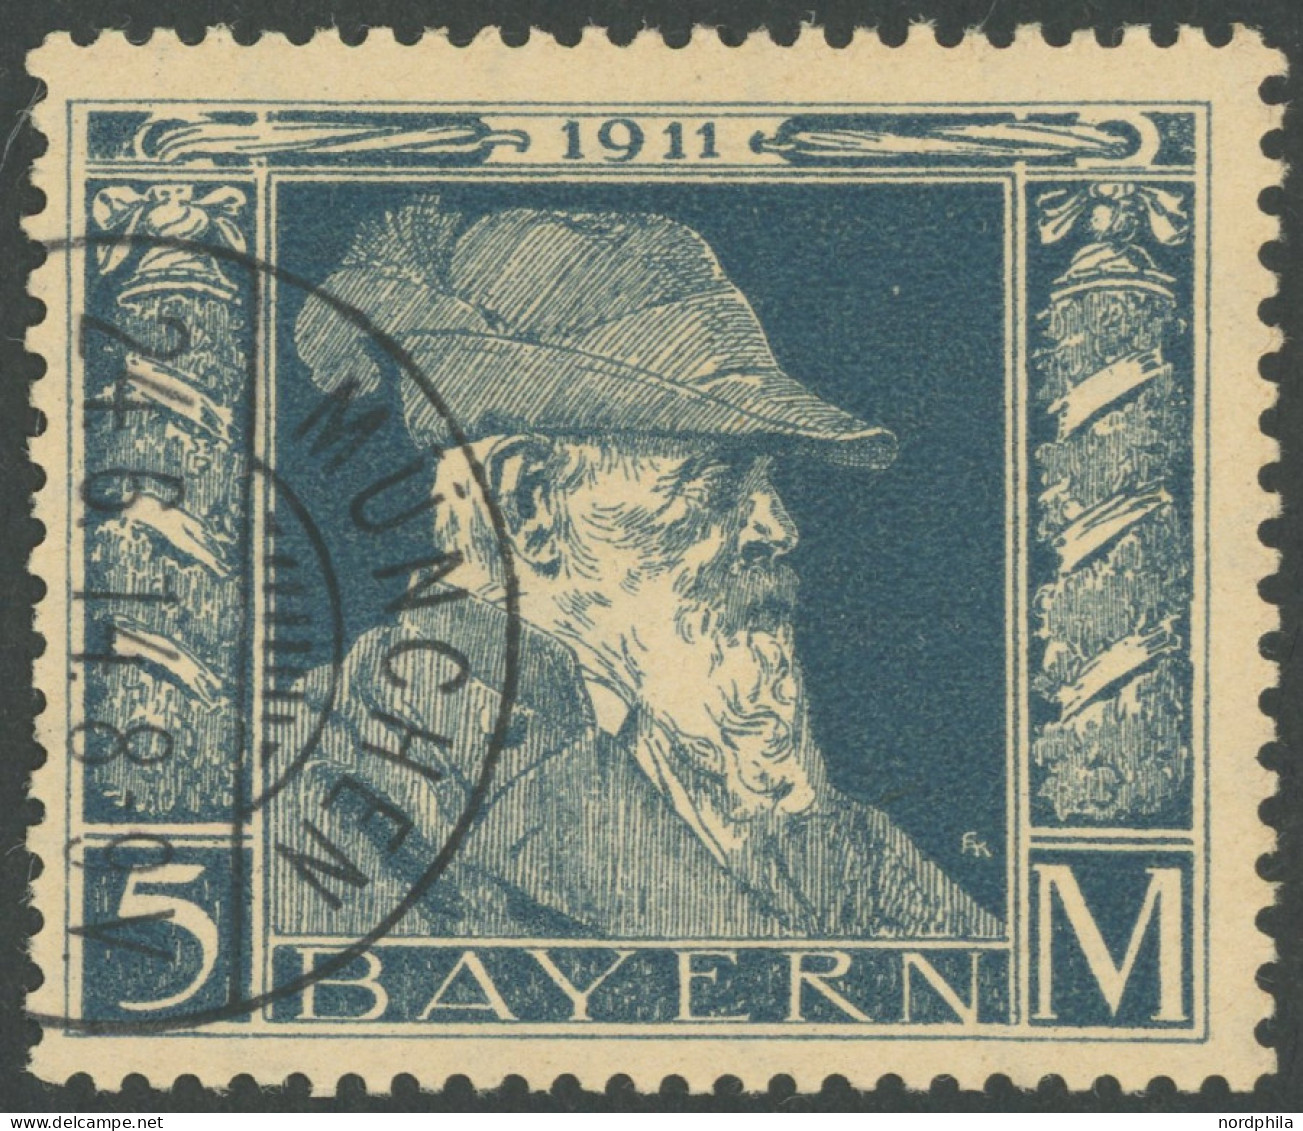 BAYERN 89II O, 1911, 5 M. Luitpold, Type II, Pracht, Mi. 220.- - Used